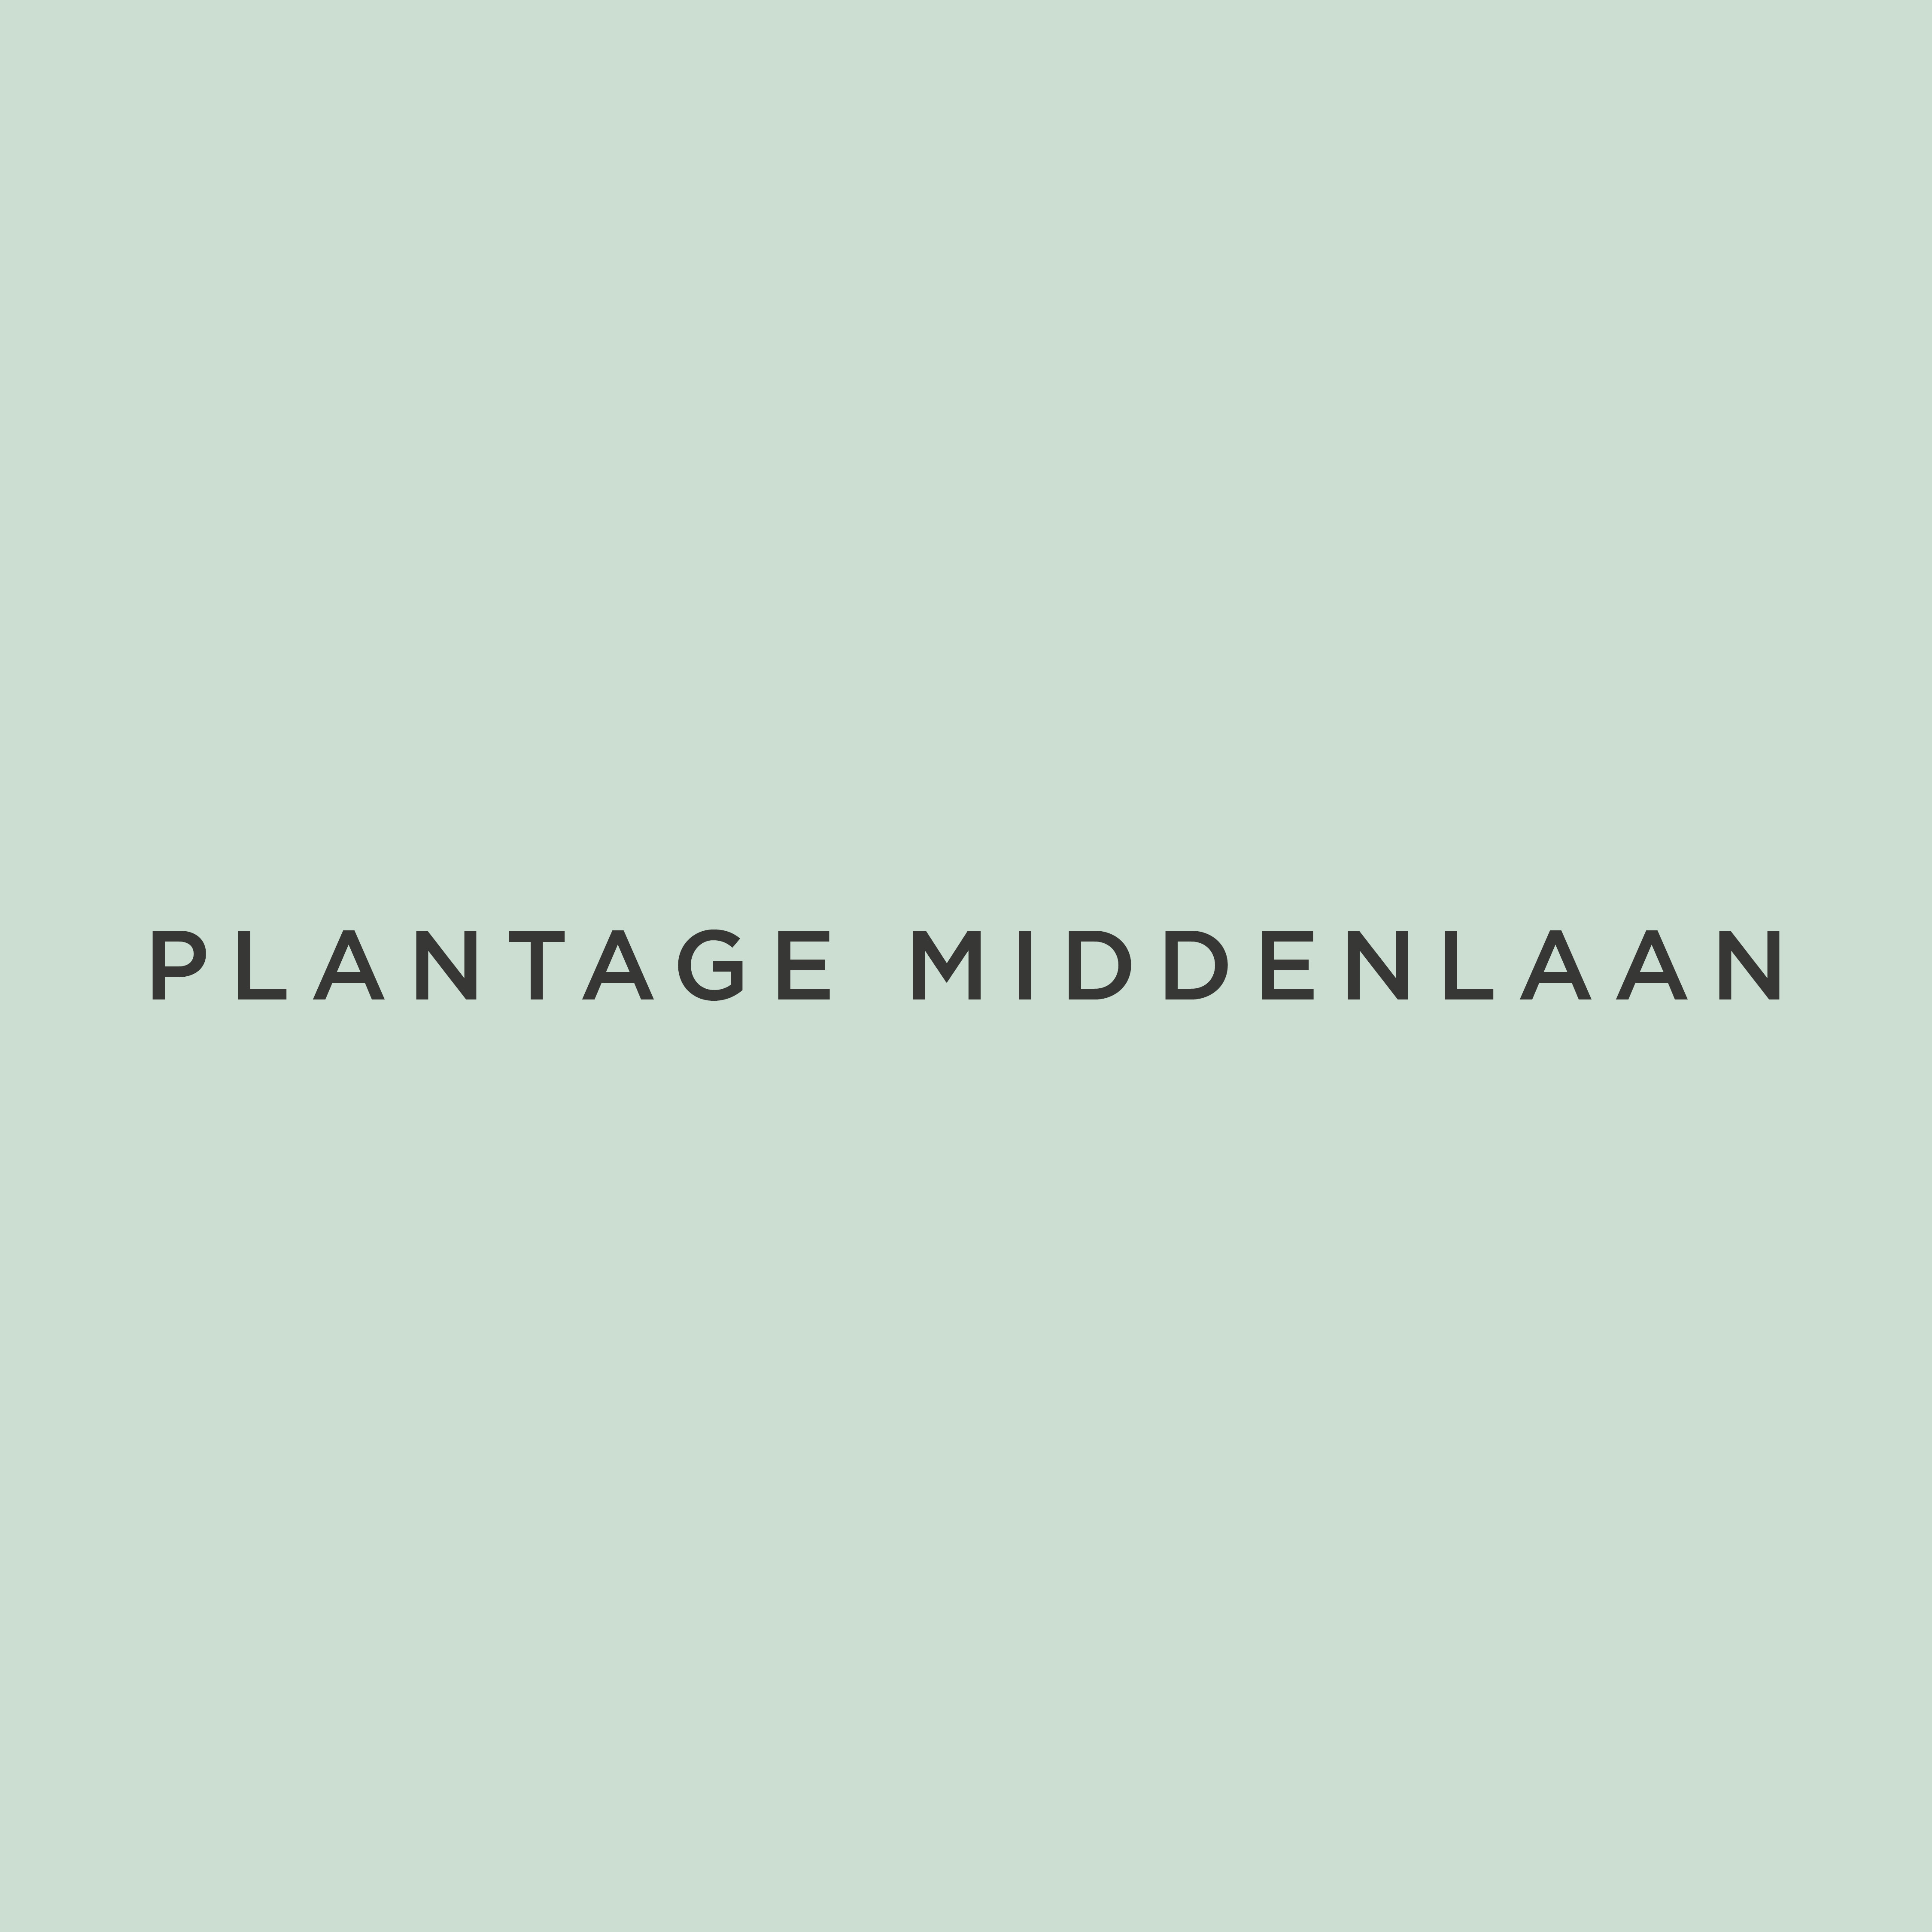 Tandartspraktijk Plantage Middenlaan